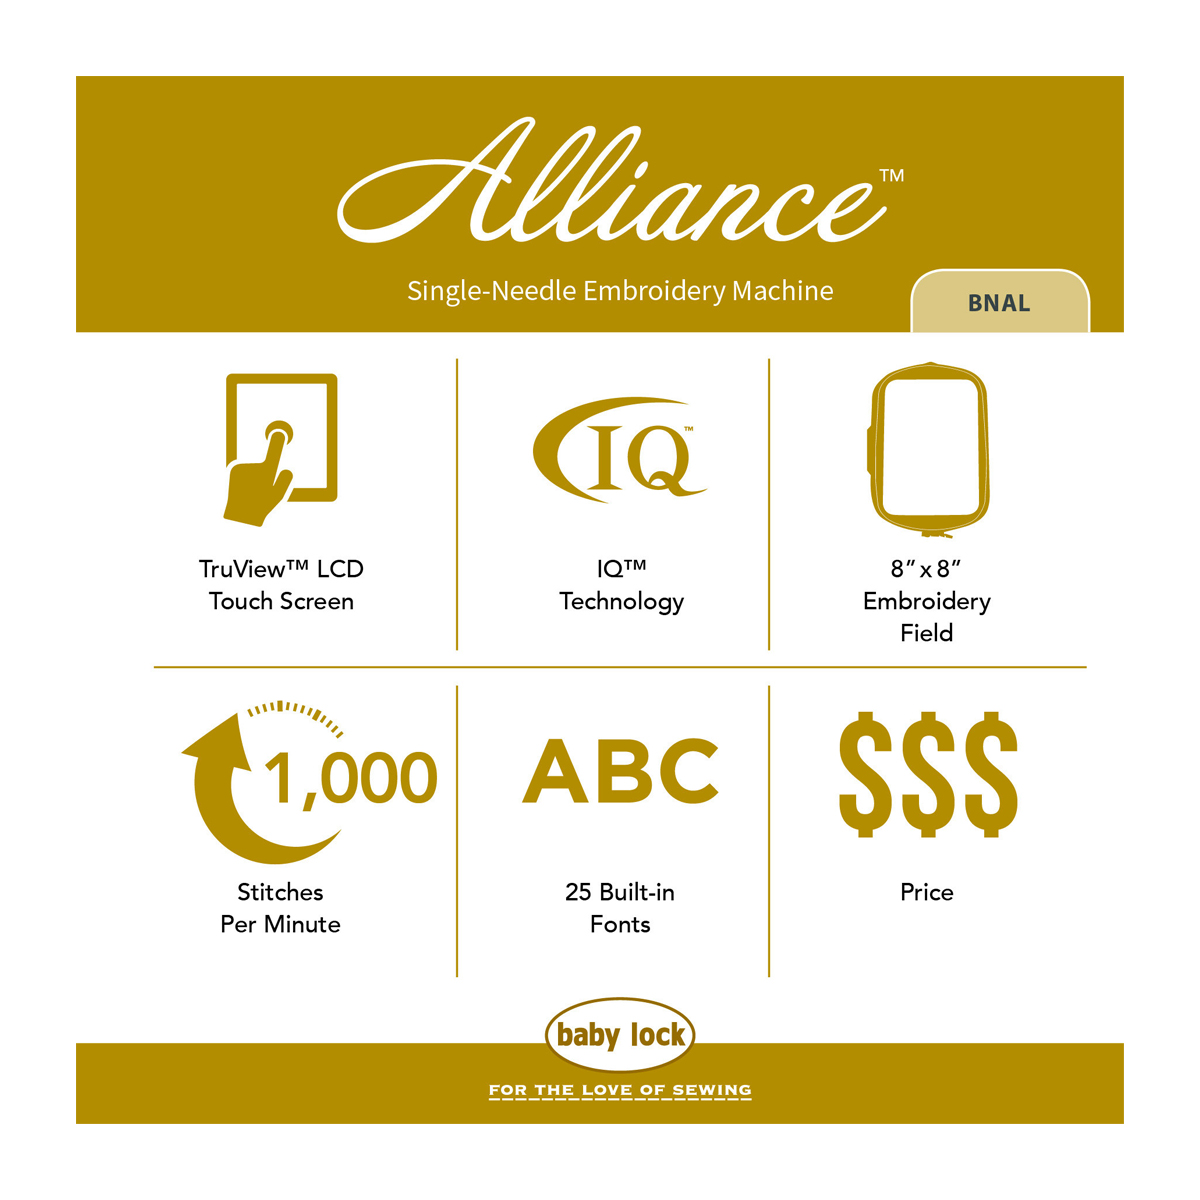 click-here-button - Oklahoma Animal Alliance